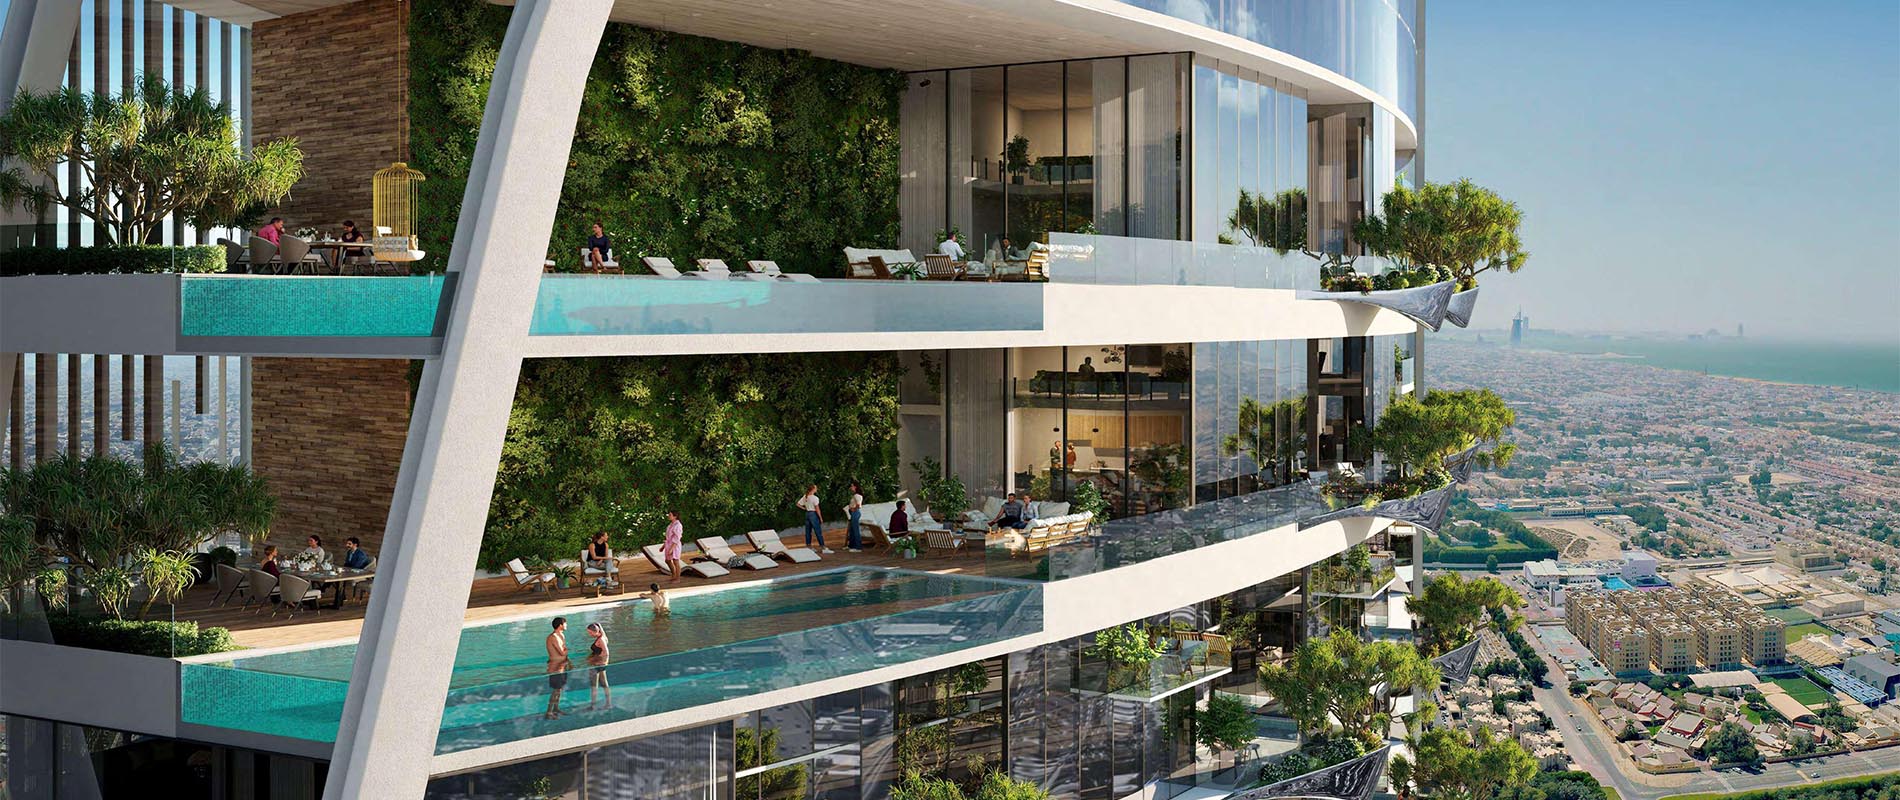 Safa One by de GRISOGONO - Luxury apartments at Safa Park Dubai.